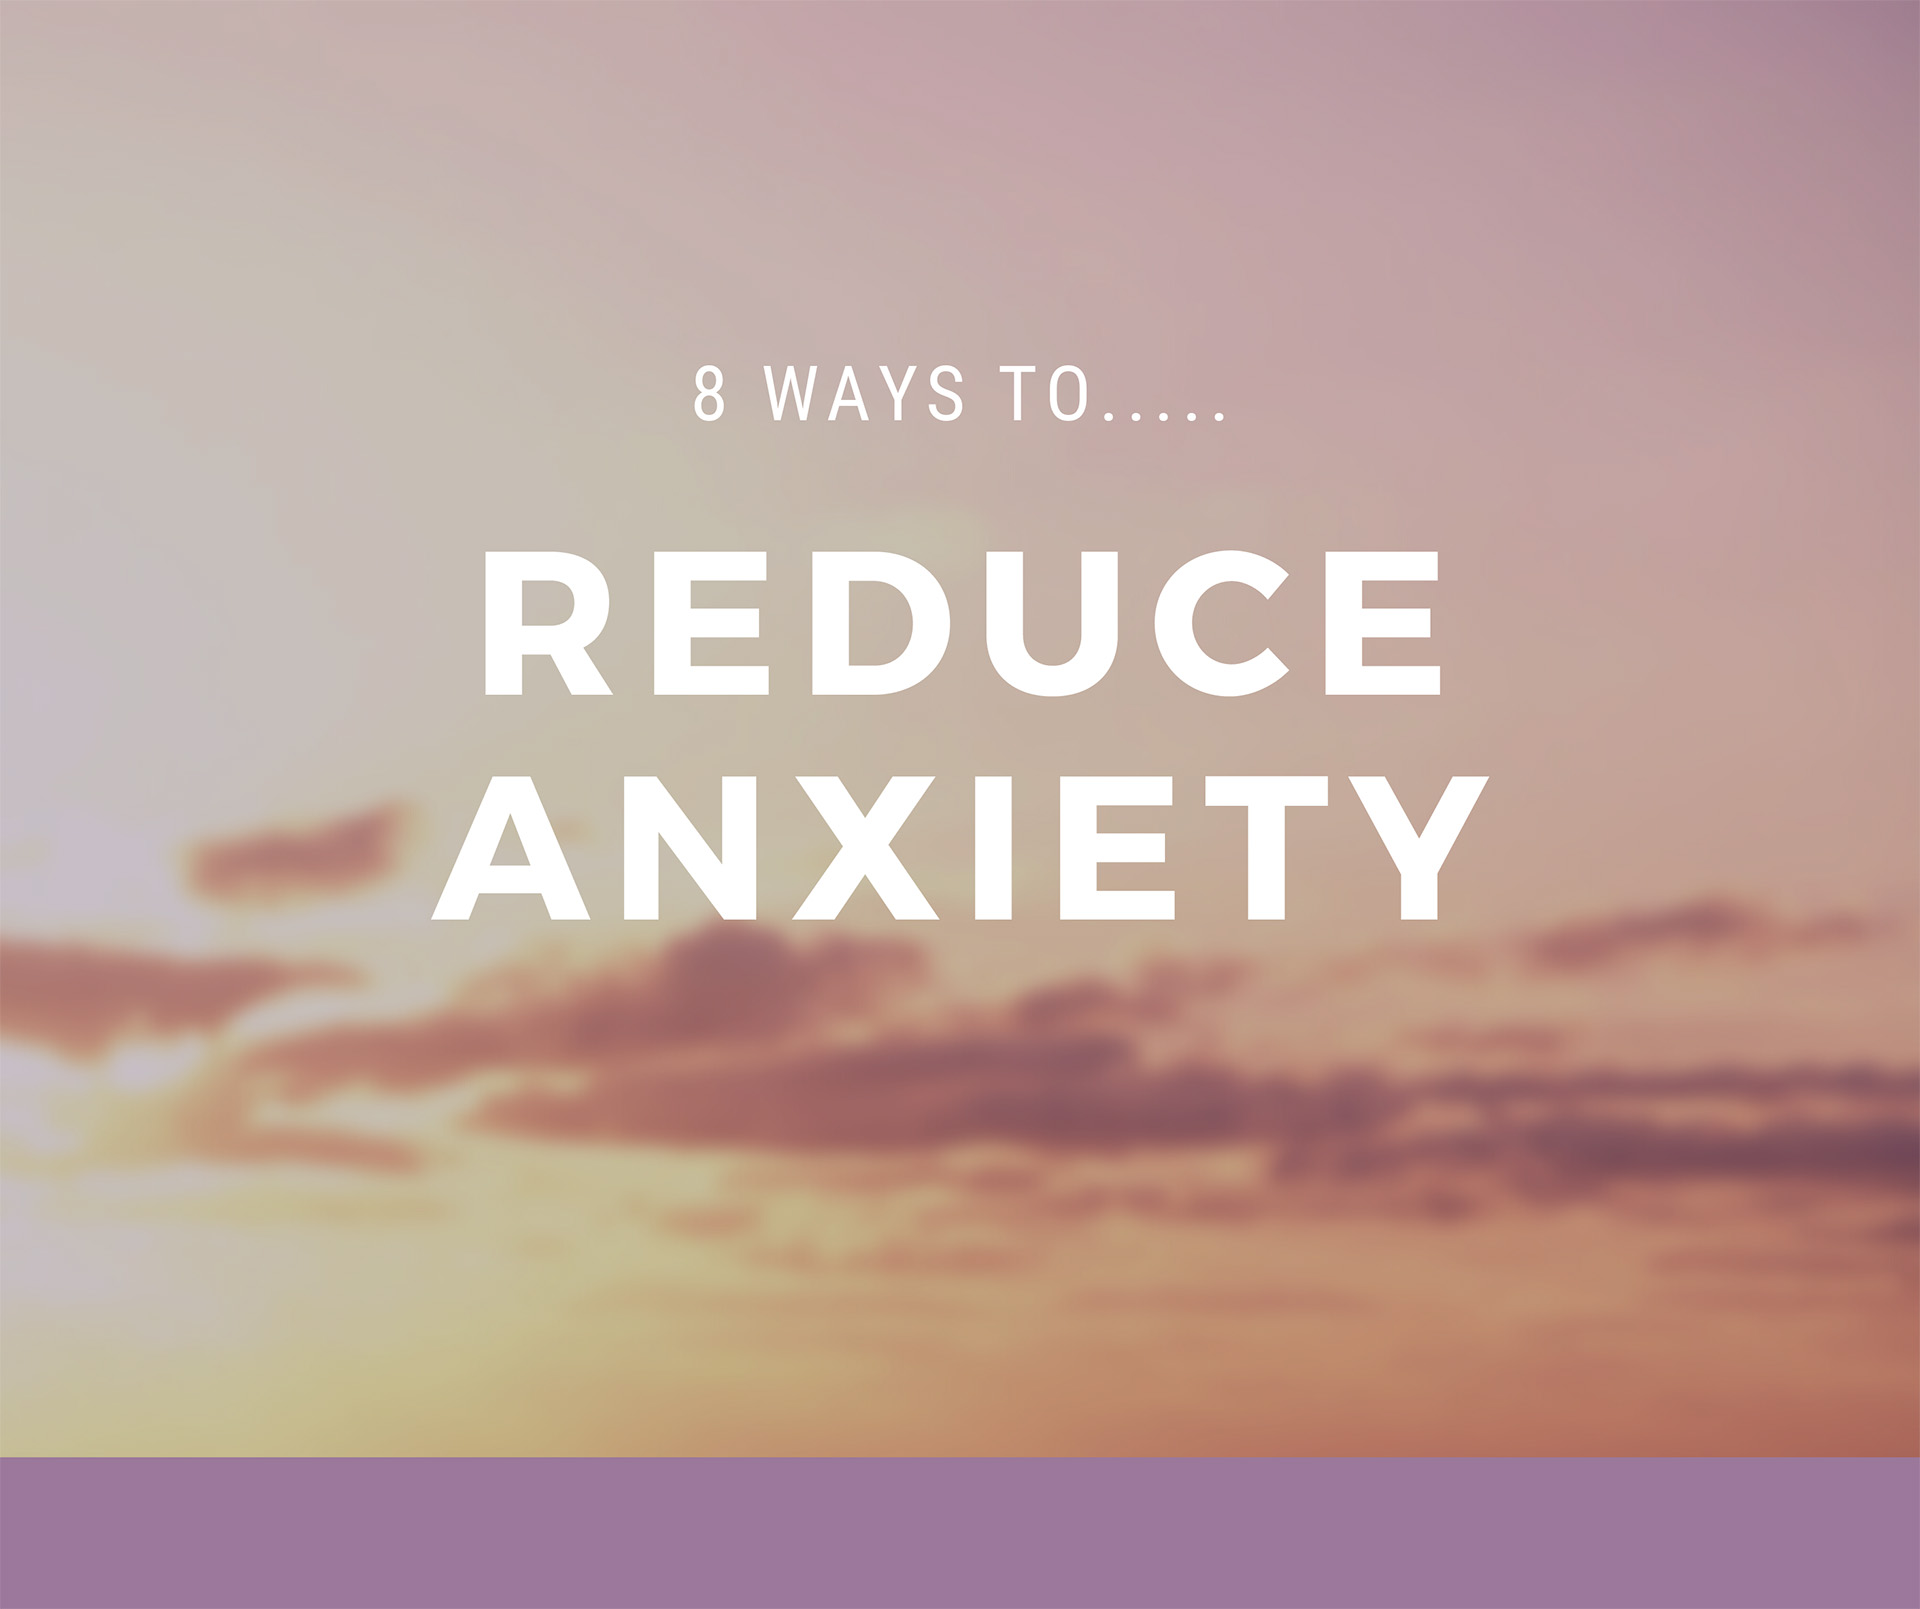 8 ways to reduce anxiety